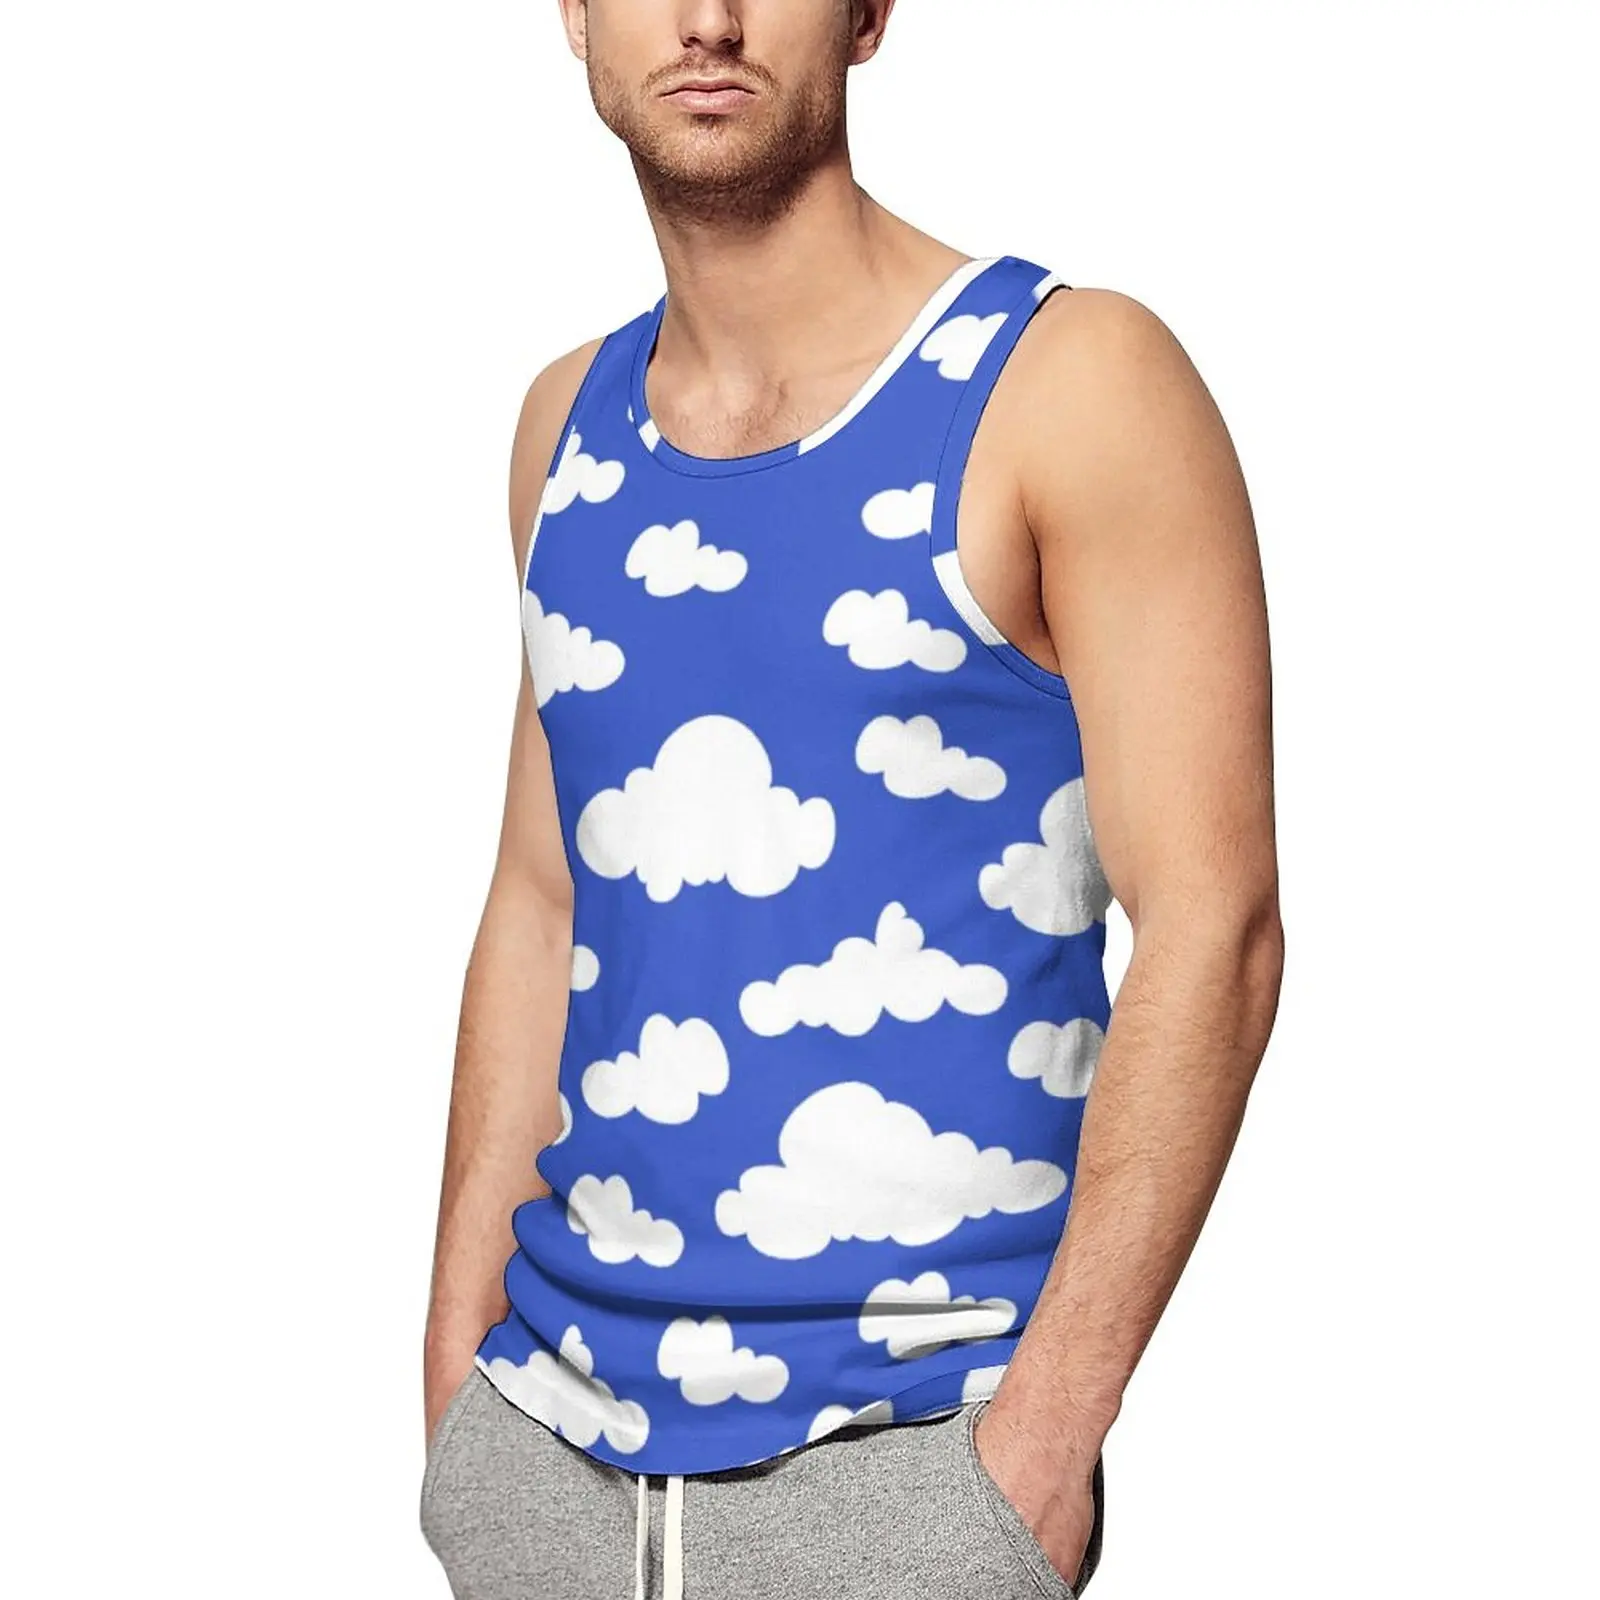 

Cartoon Cloud Tank Top Cloudy Blue Sky Fashion Tops Summer Gym Man Design Sleeveless Vests Large Size